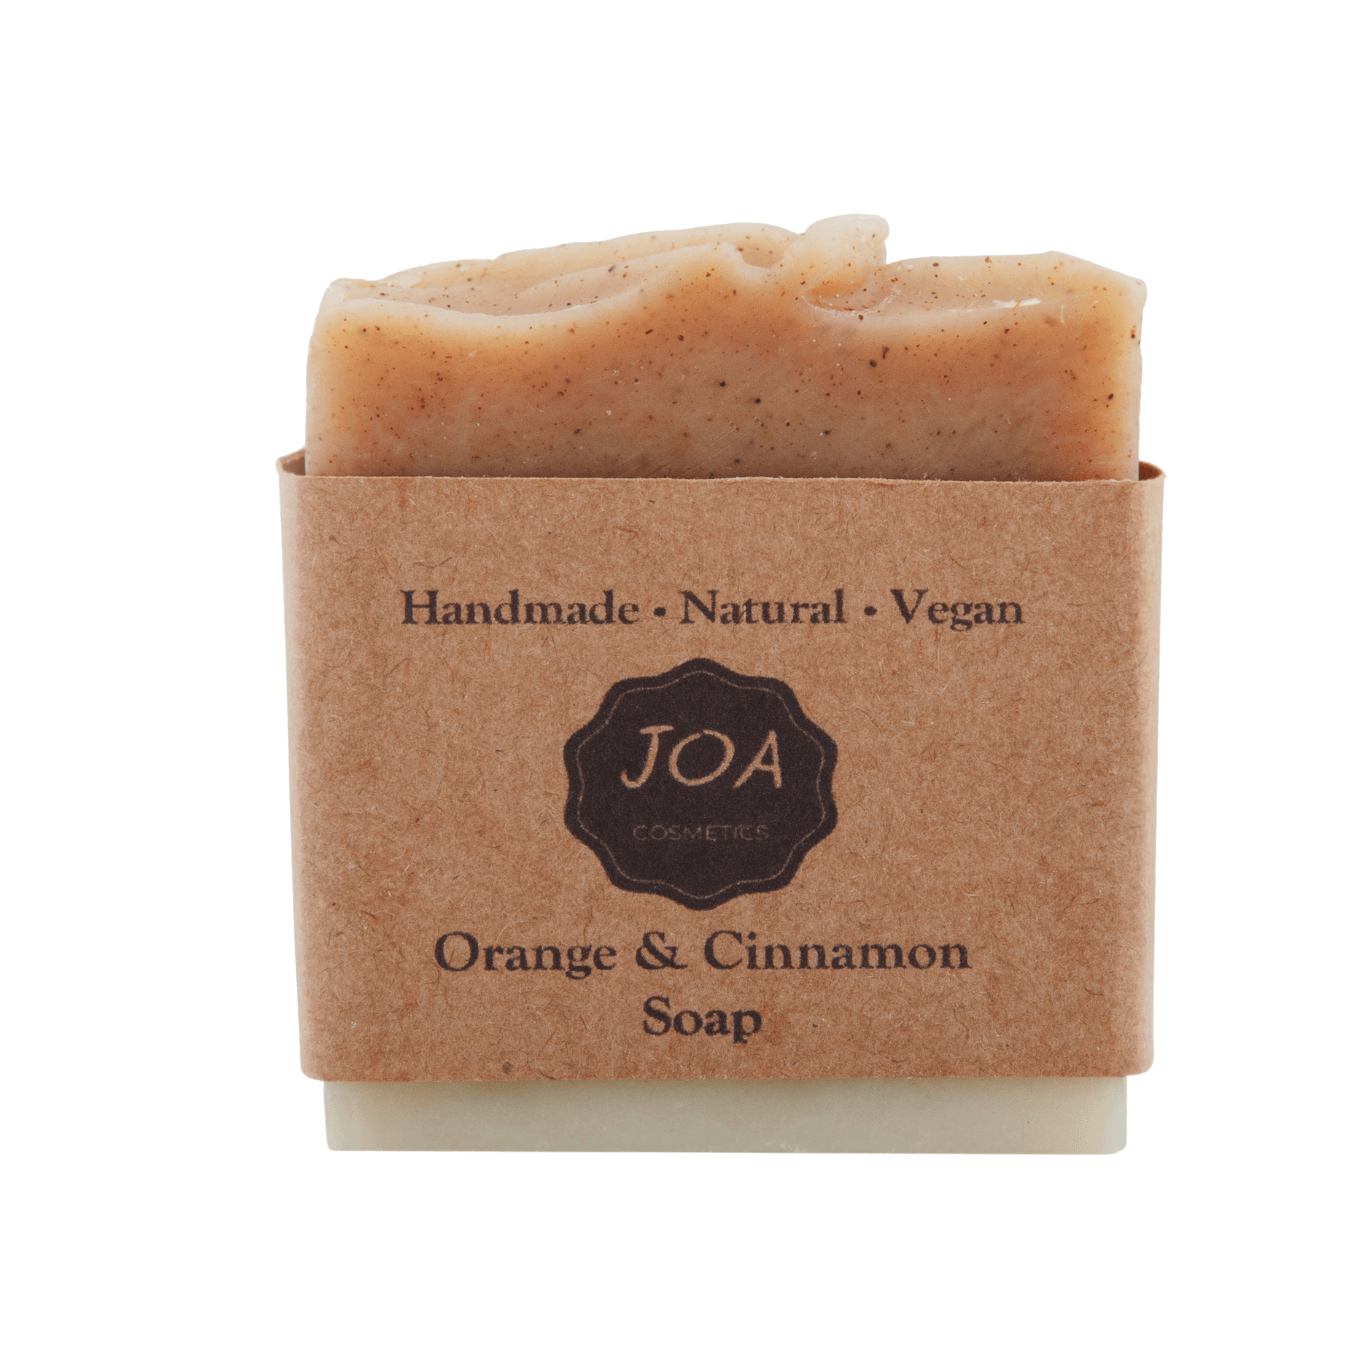 100% Natural - Handmade. Vegan - Palm Oil Free. Contains orange & cinnamon oils. The best handmade soap.